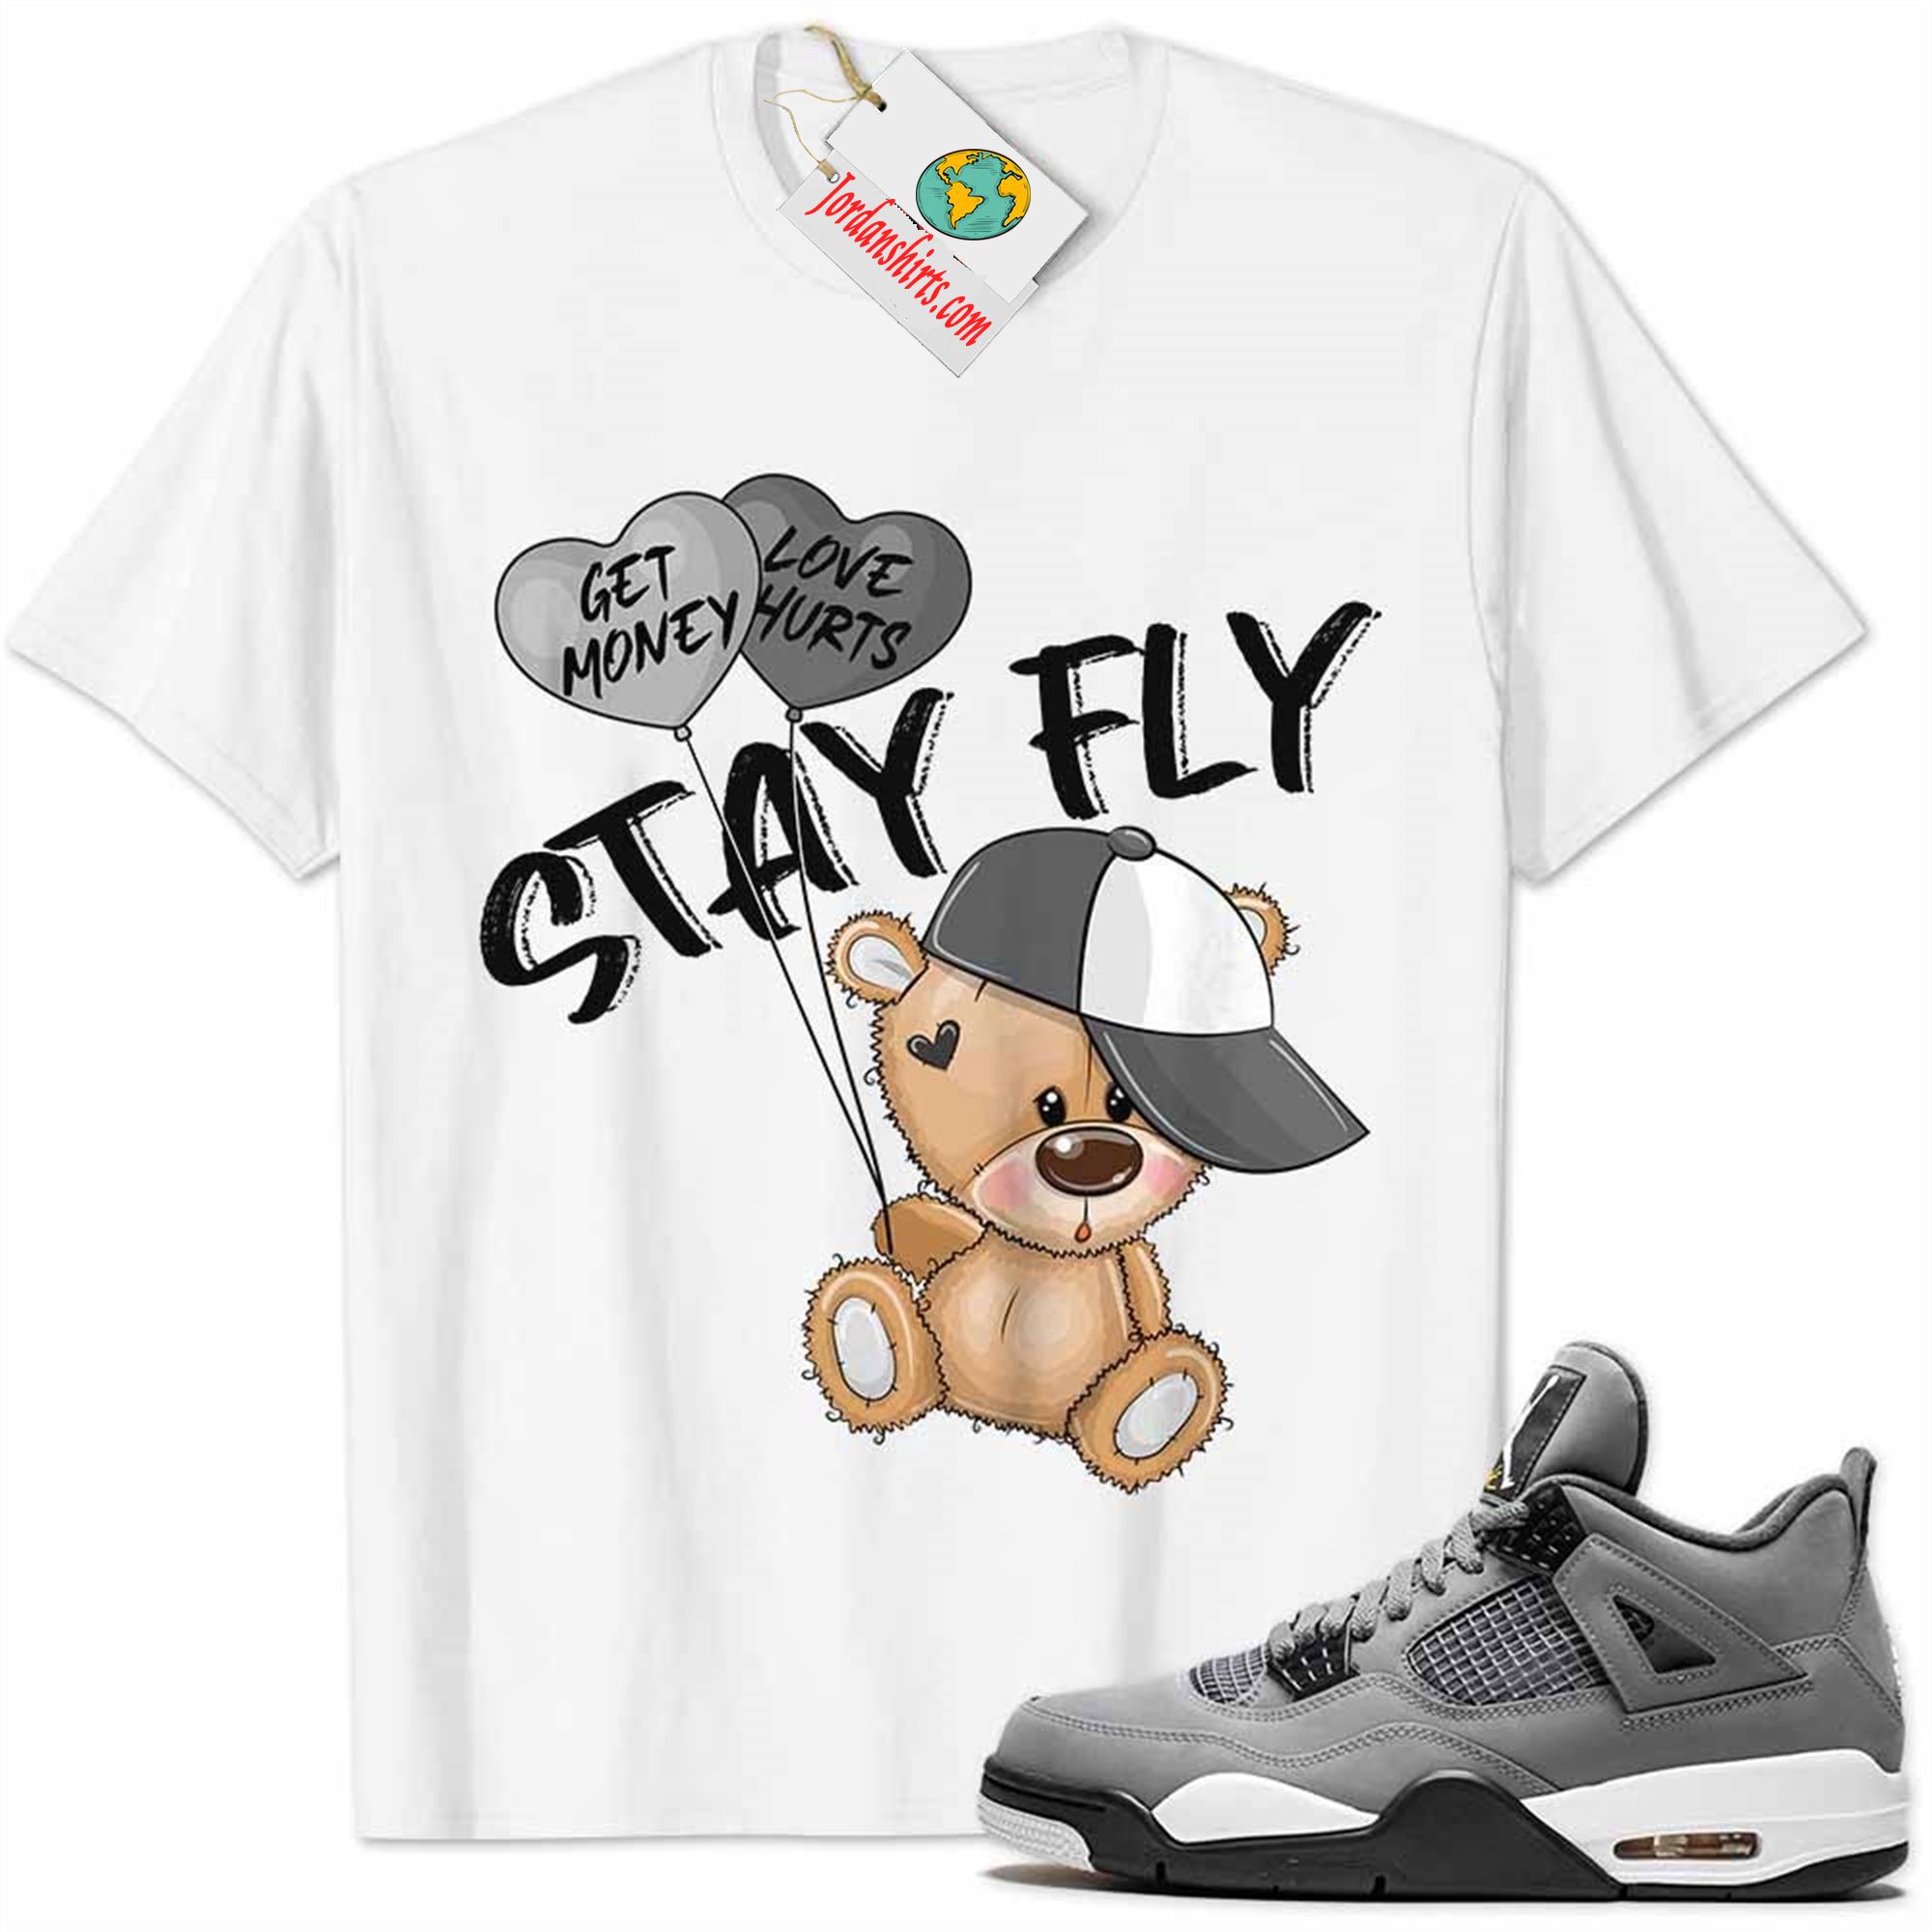 Jordan 4 Shirt, Cool Grey 4s Shirt Cute Teddy Bear Stay Fly Get Money White Full Size Up To 5xl